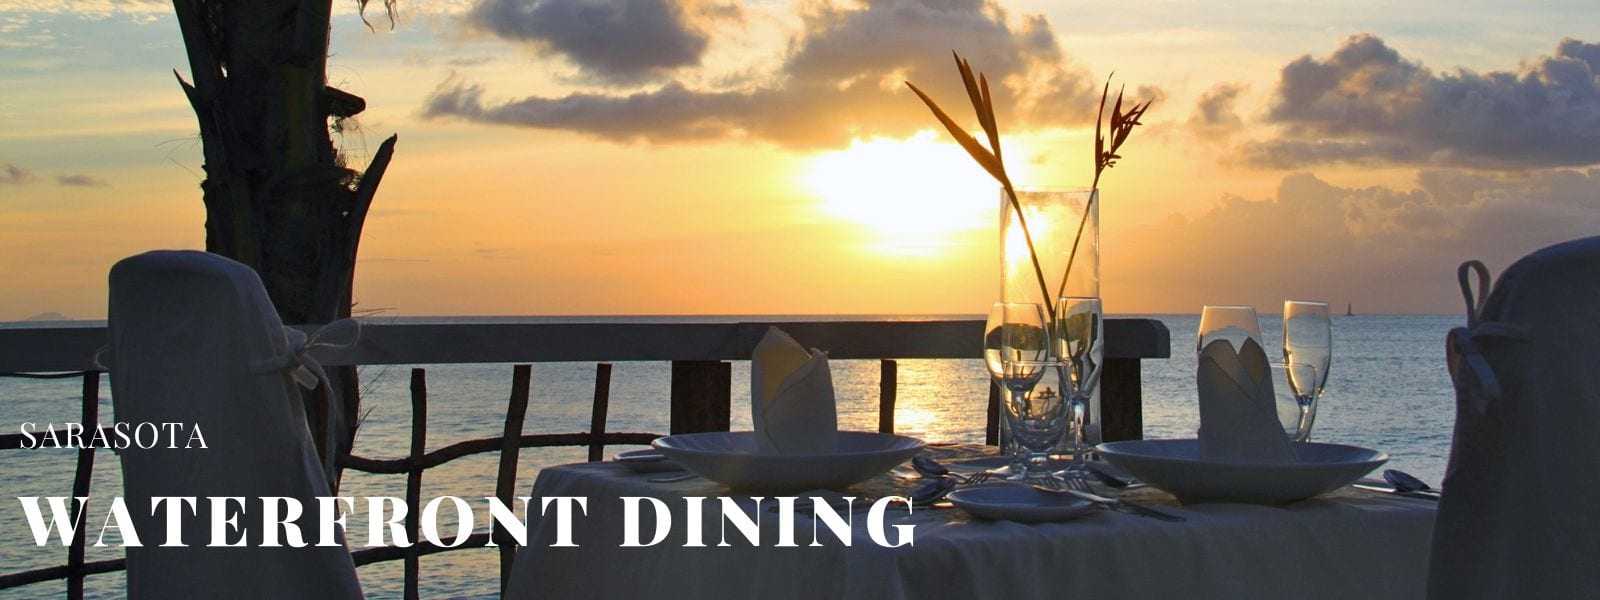 Table set for Sarasota Waterfront Dining